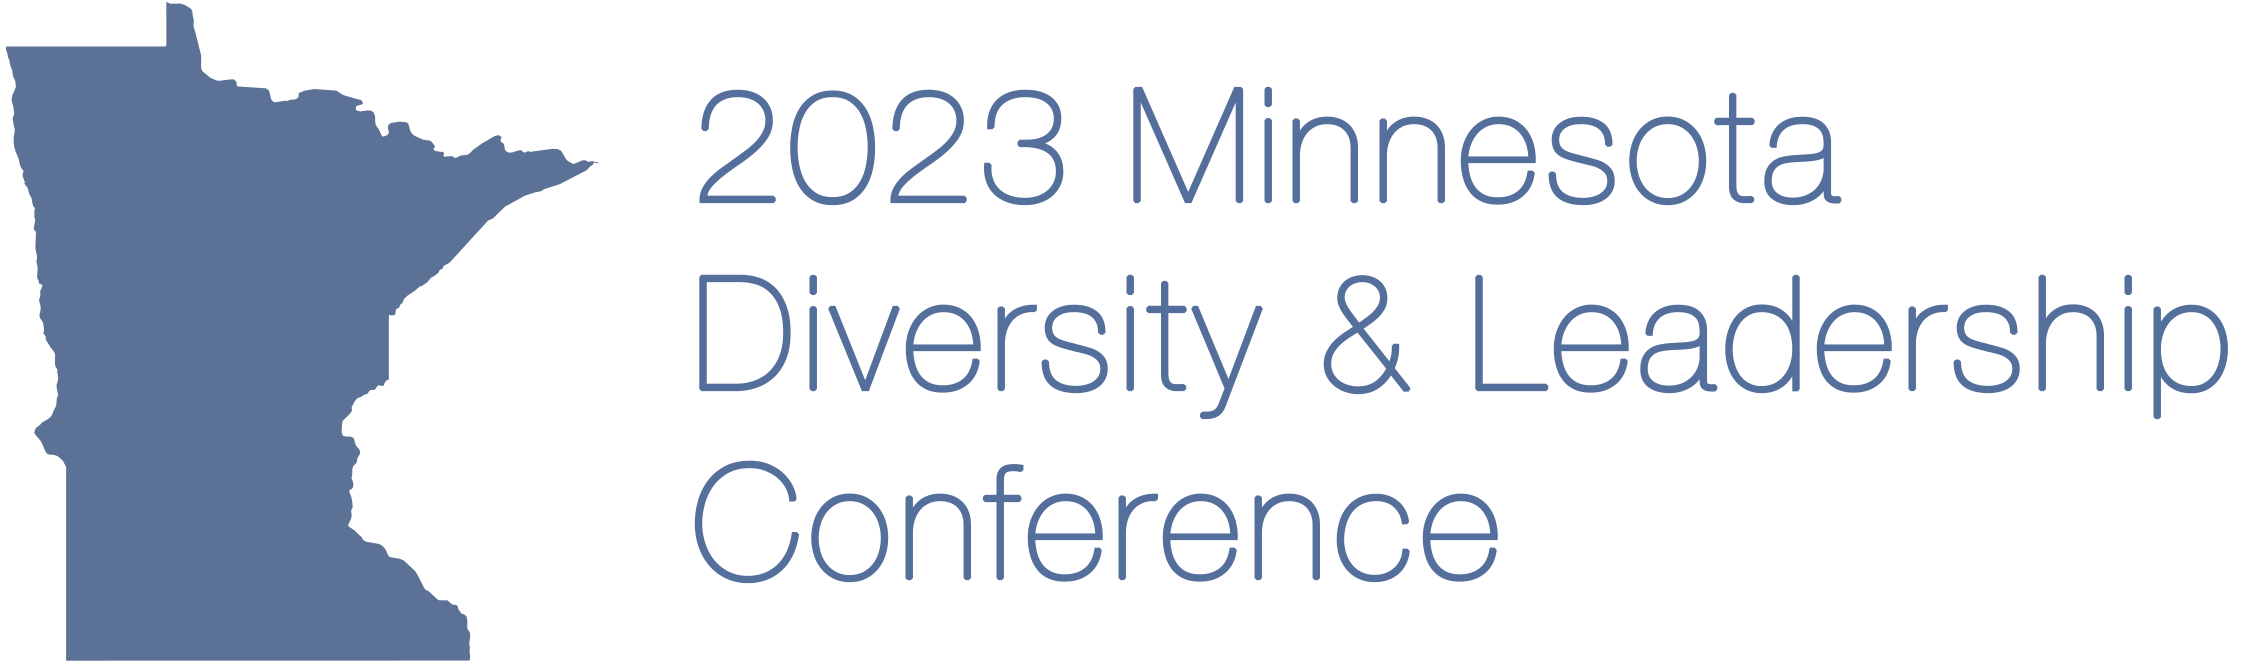 2023 1st Annual Minnesota Diversity & Leadership Conference - MNDLC